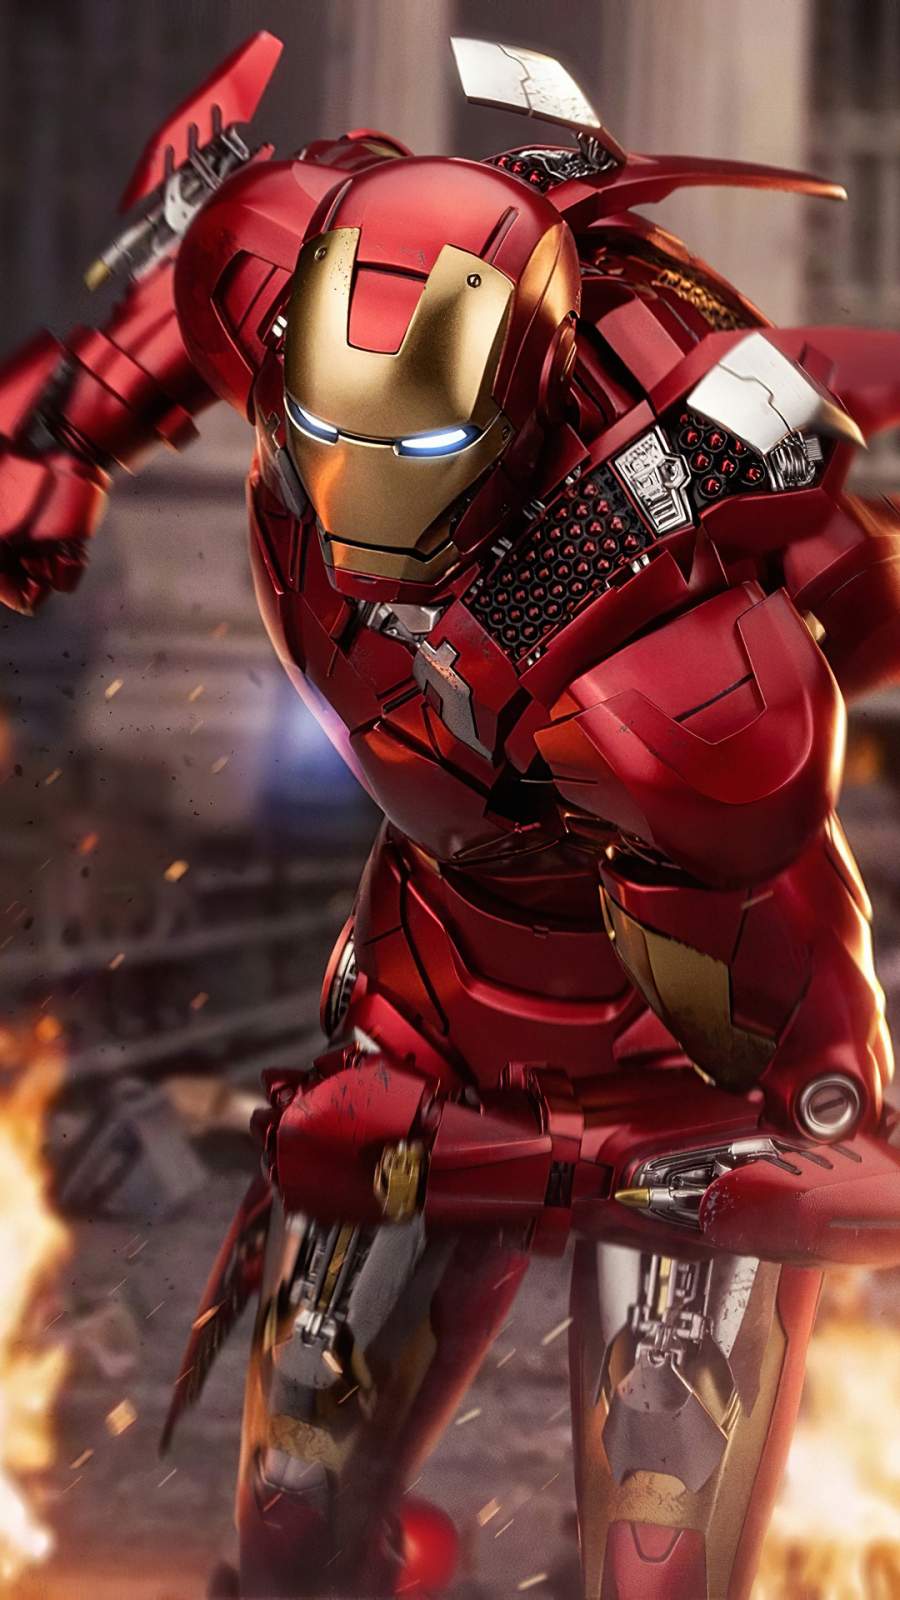 Iron Man Weapons 4K iPhone Wallpaper Wallpaper, iPhone Wallpaper